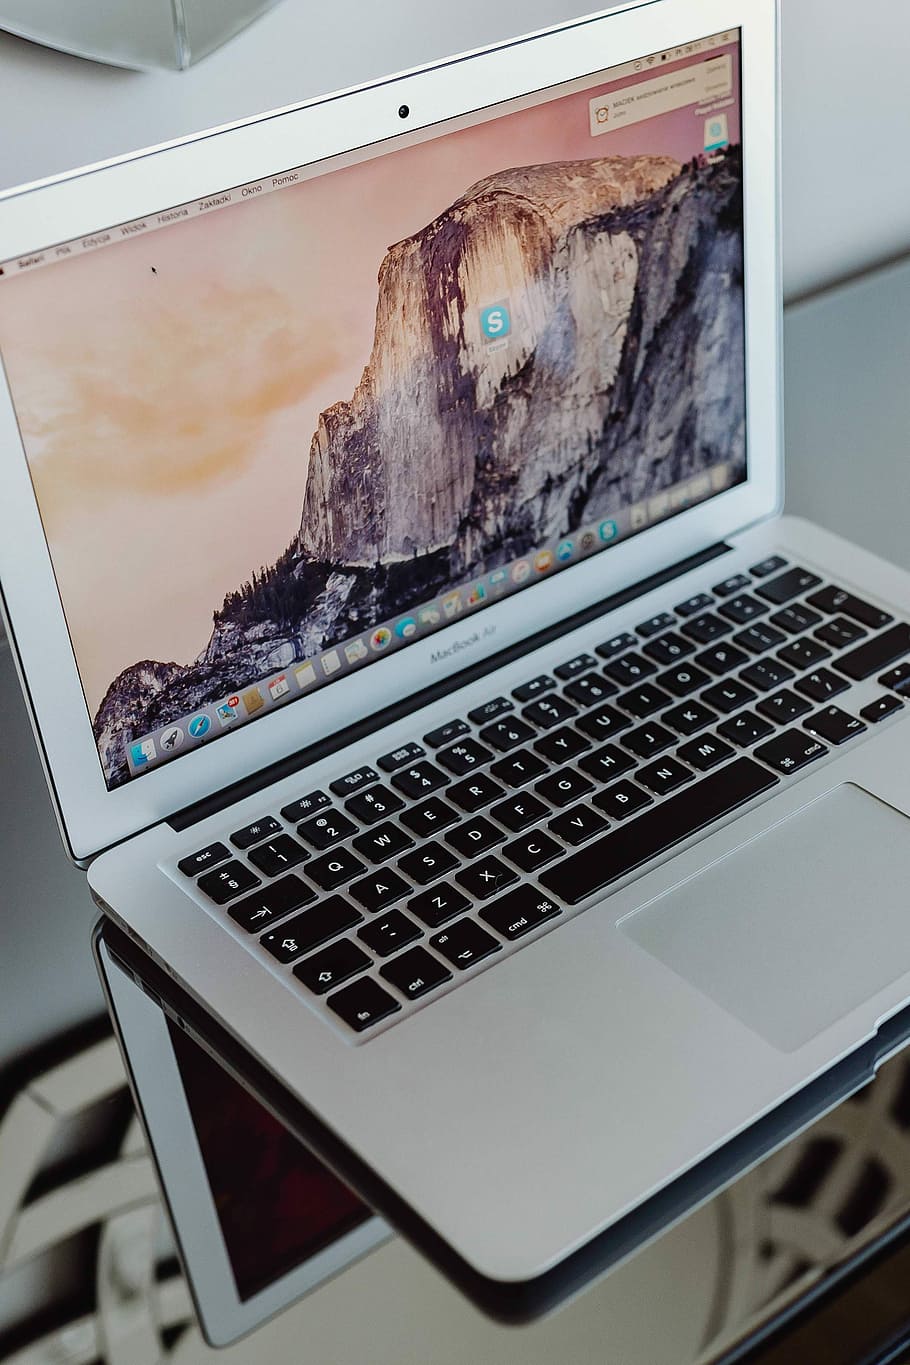 macbook apel perak, Perak, Apple MacBook, Apple, komputer, macbook, notebook, laptop, mac, teknologi